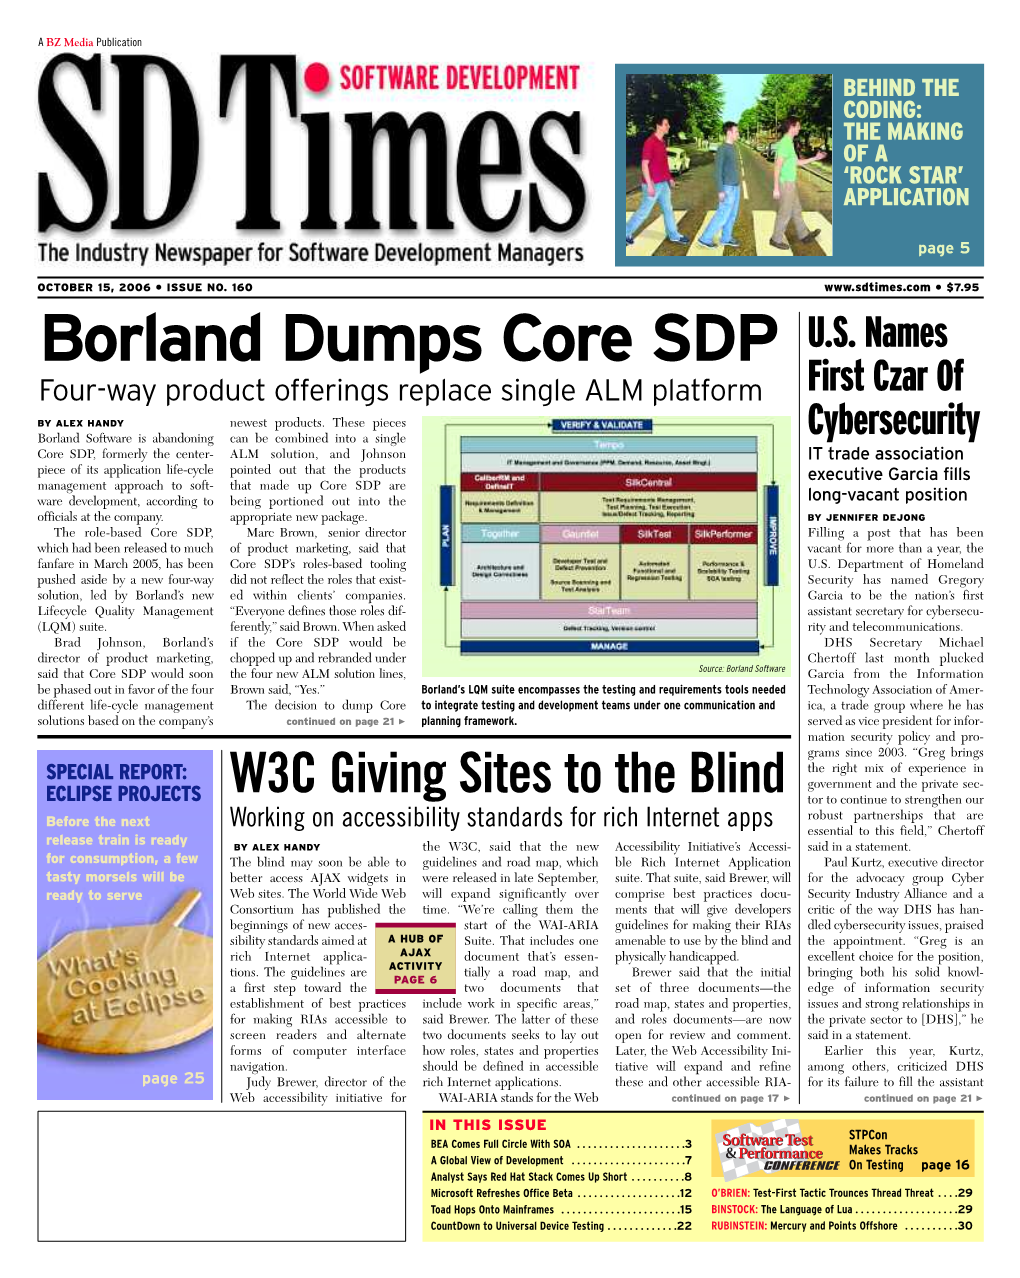 Borland Dumps Core SDP U.S